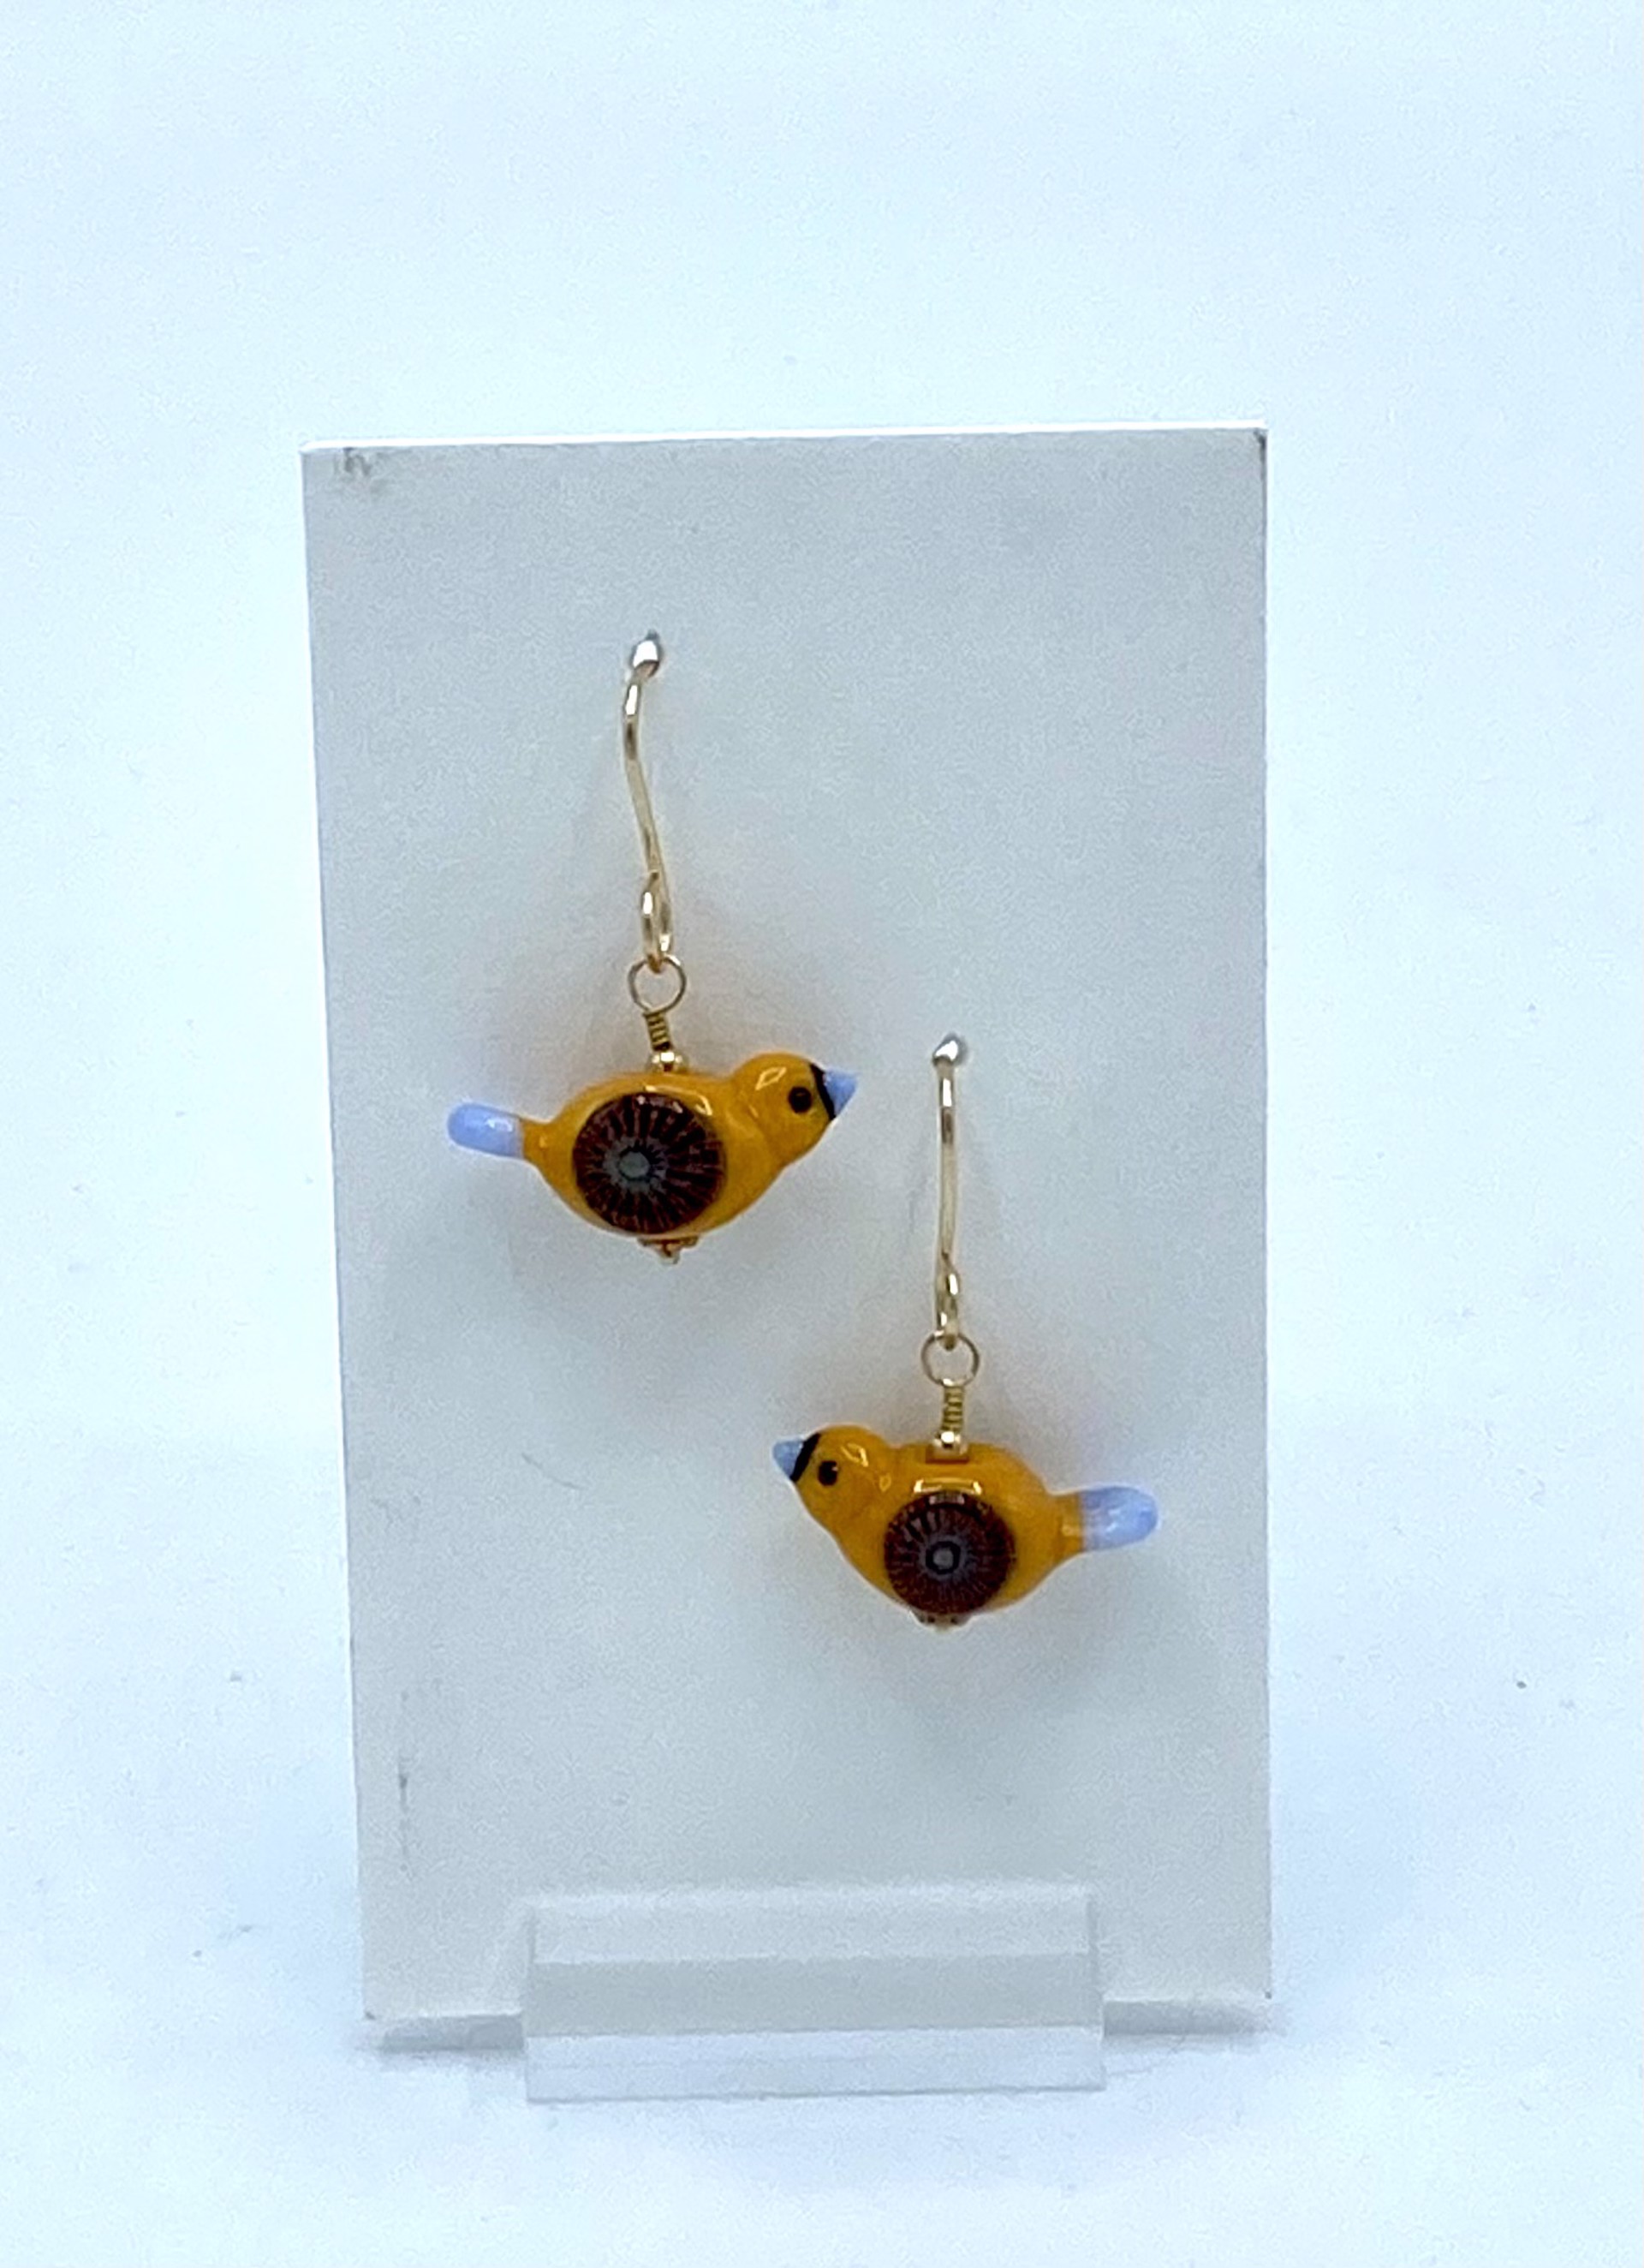 Glass Bird Earrings Gold Filled (Yellow) by Emelie Hebert